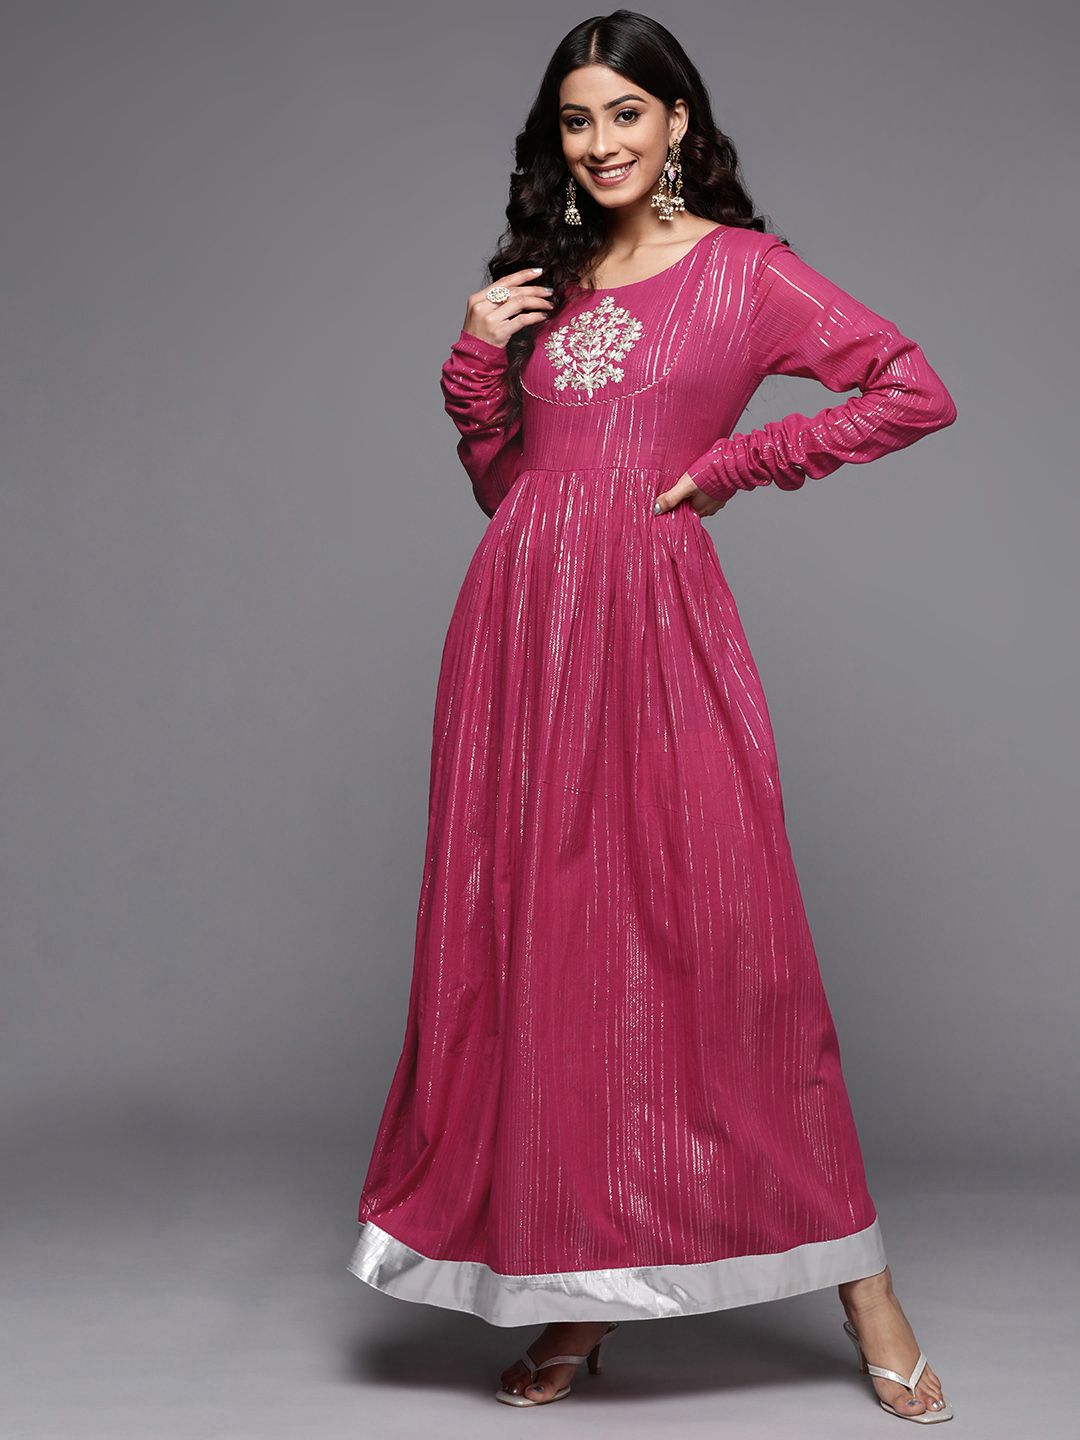 Varanga Fuchsia & Silver-Toned Embroidered Maxi Dress Price in India